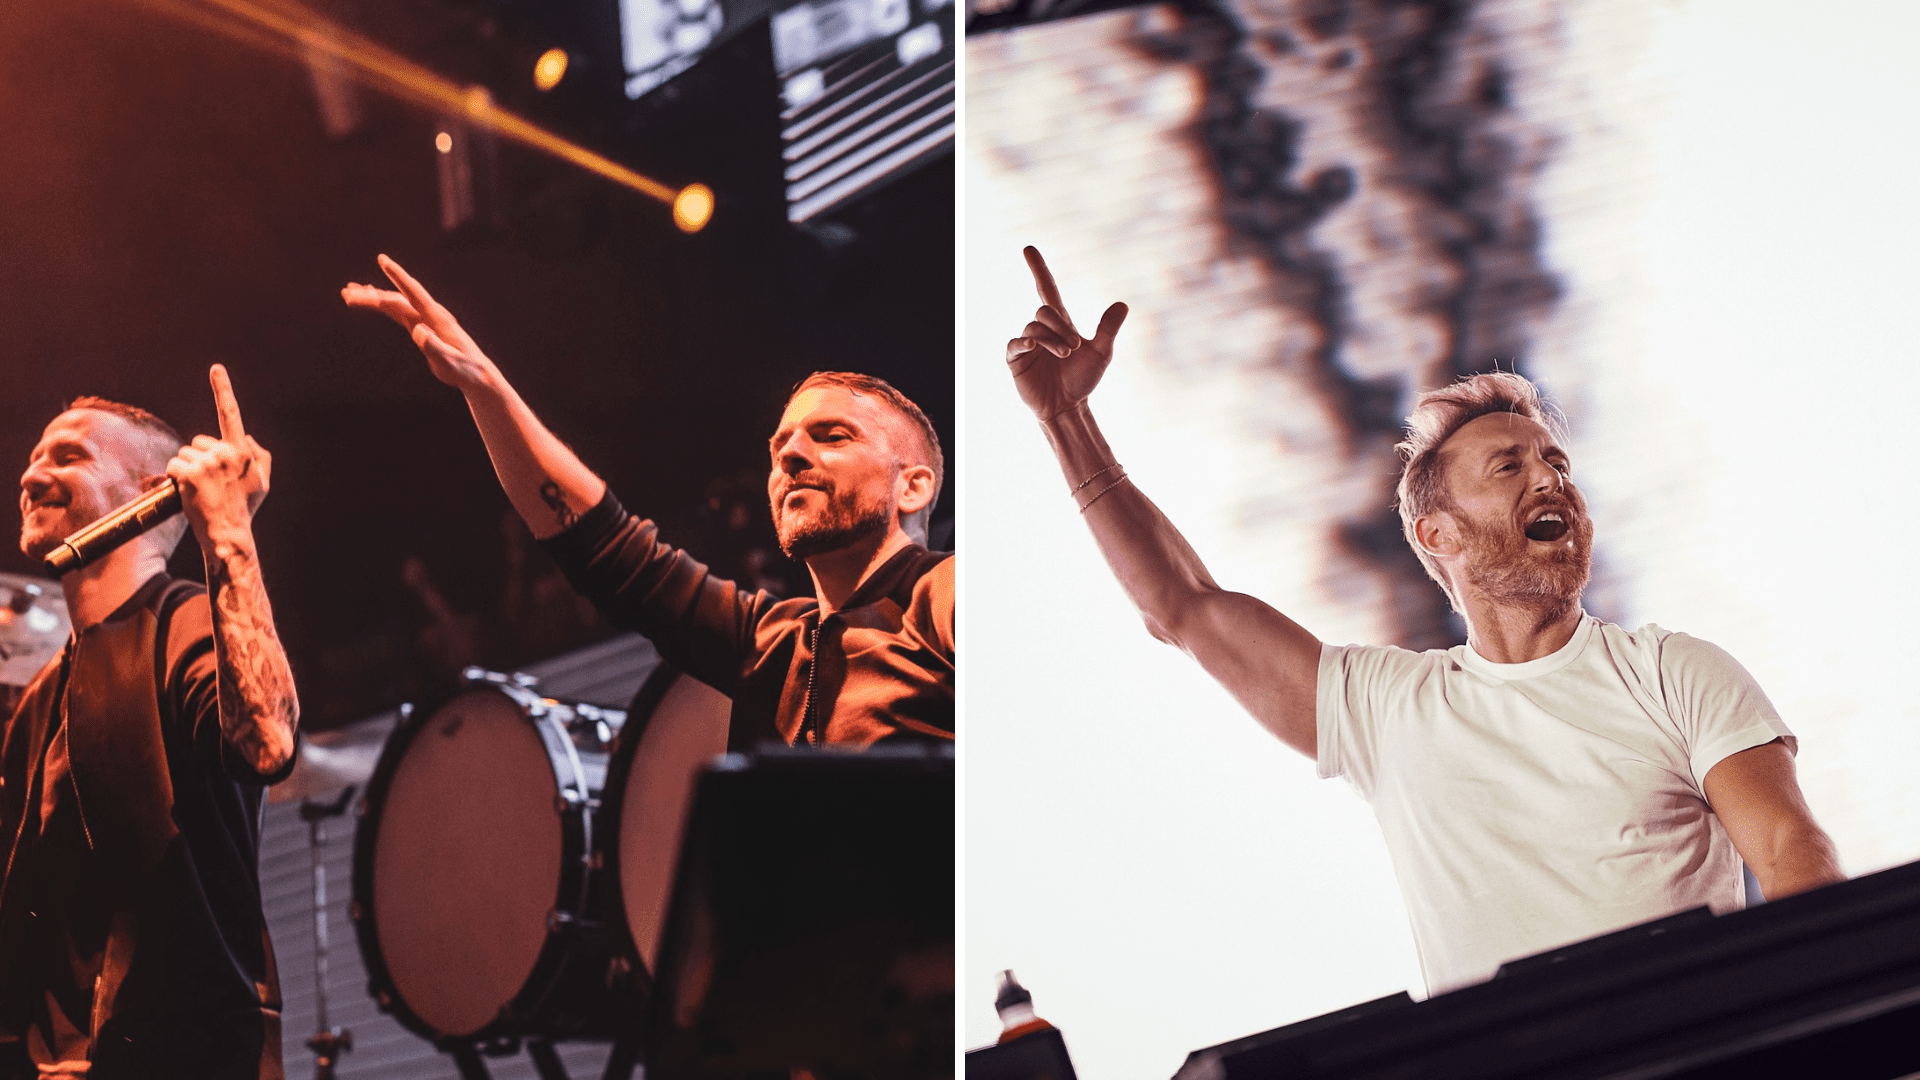 David Guetta collaborates with Galantis & Little Mix on new single ‘Heartbreak Anthem’: Listen